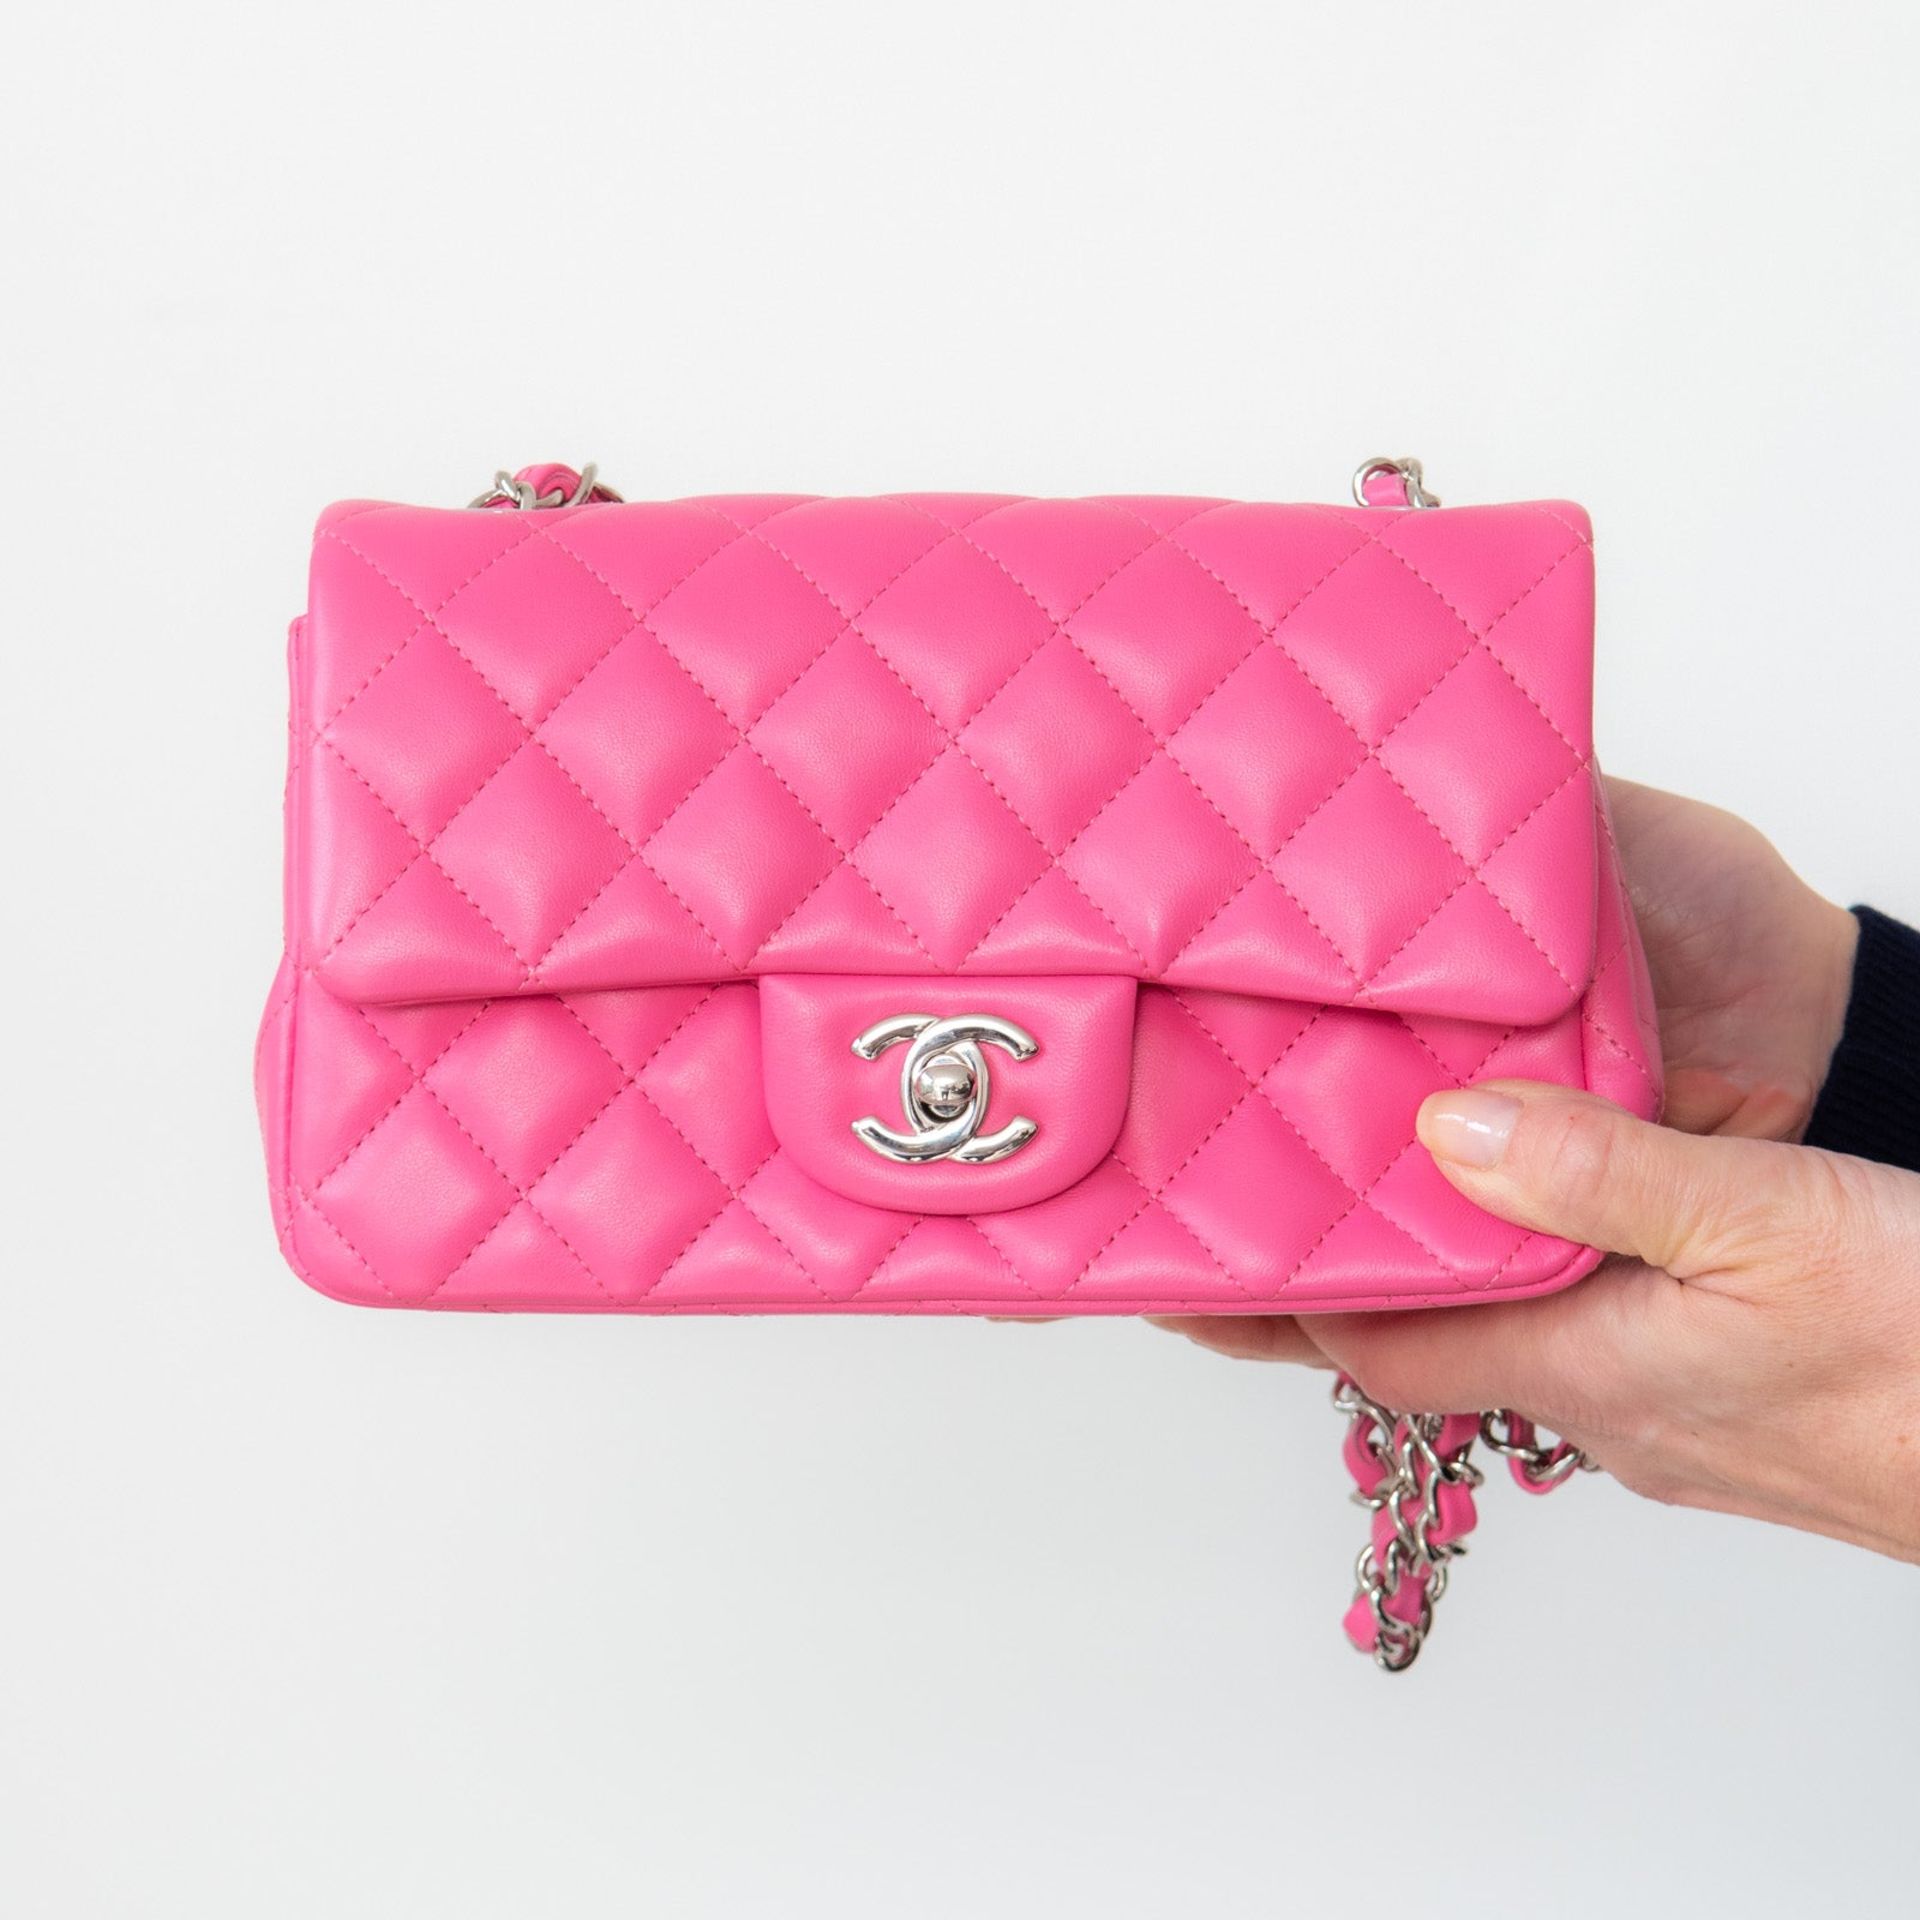 Chanel Pink Mini Rectangular Flap Bag - Image 2 of 13